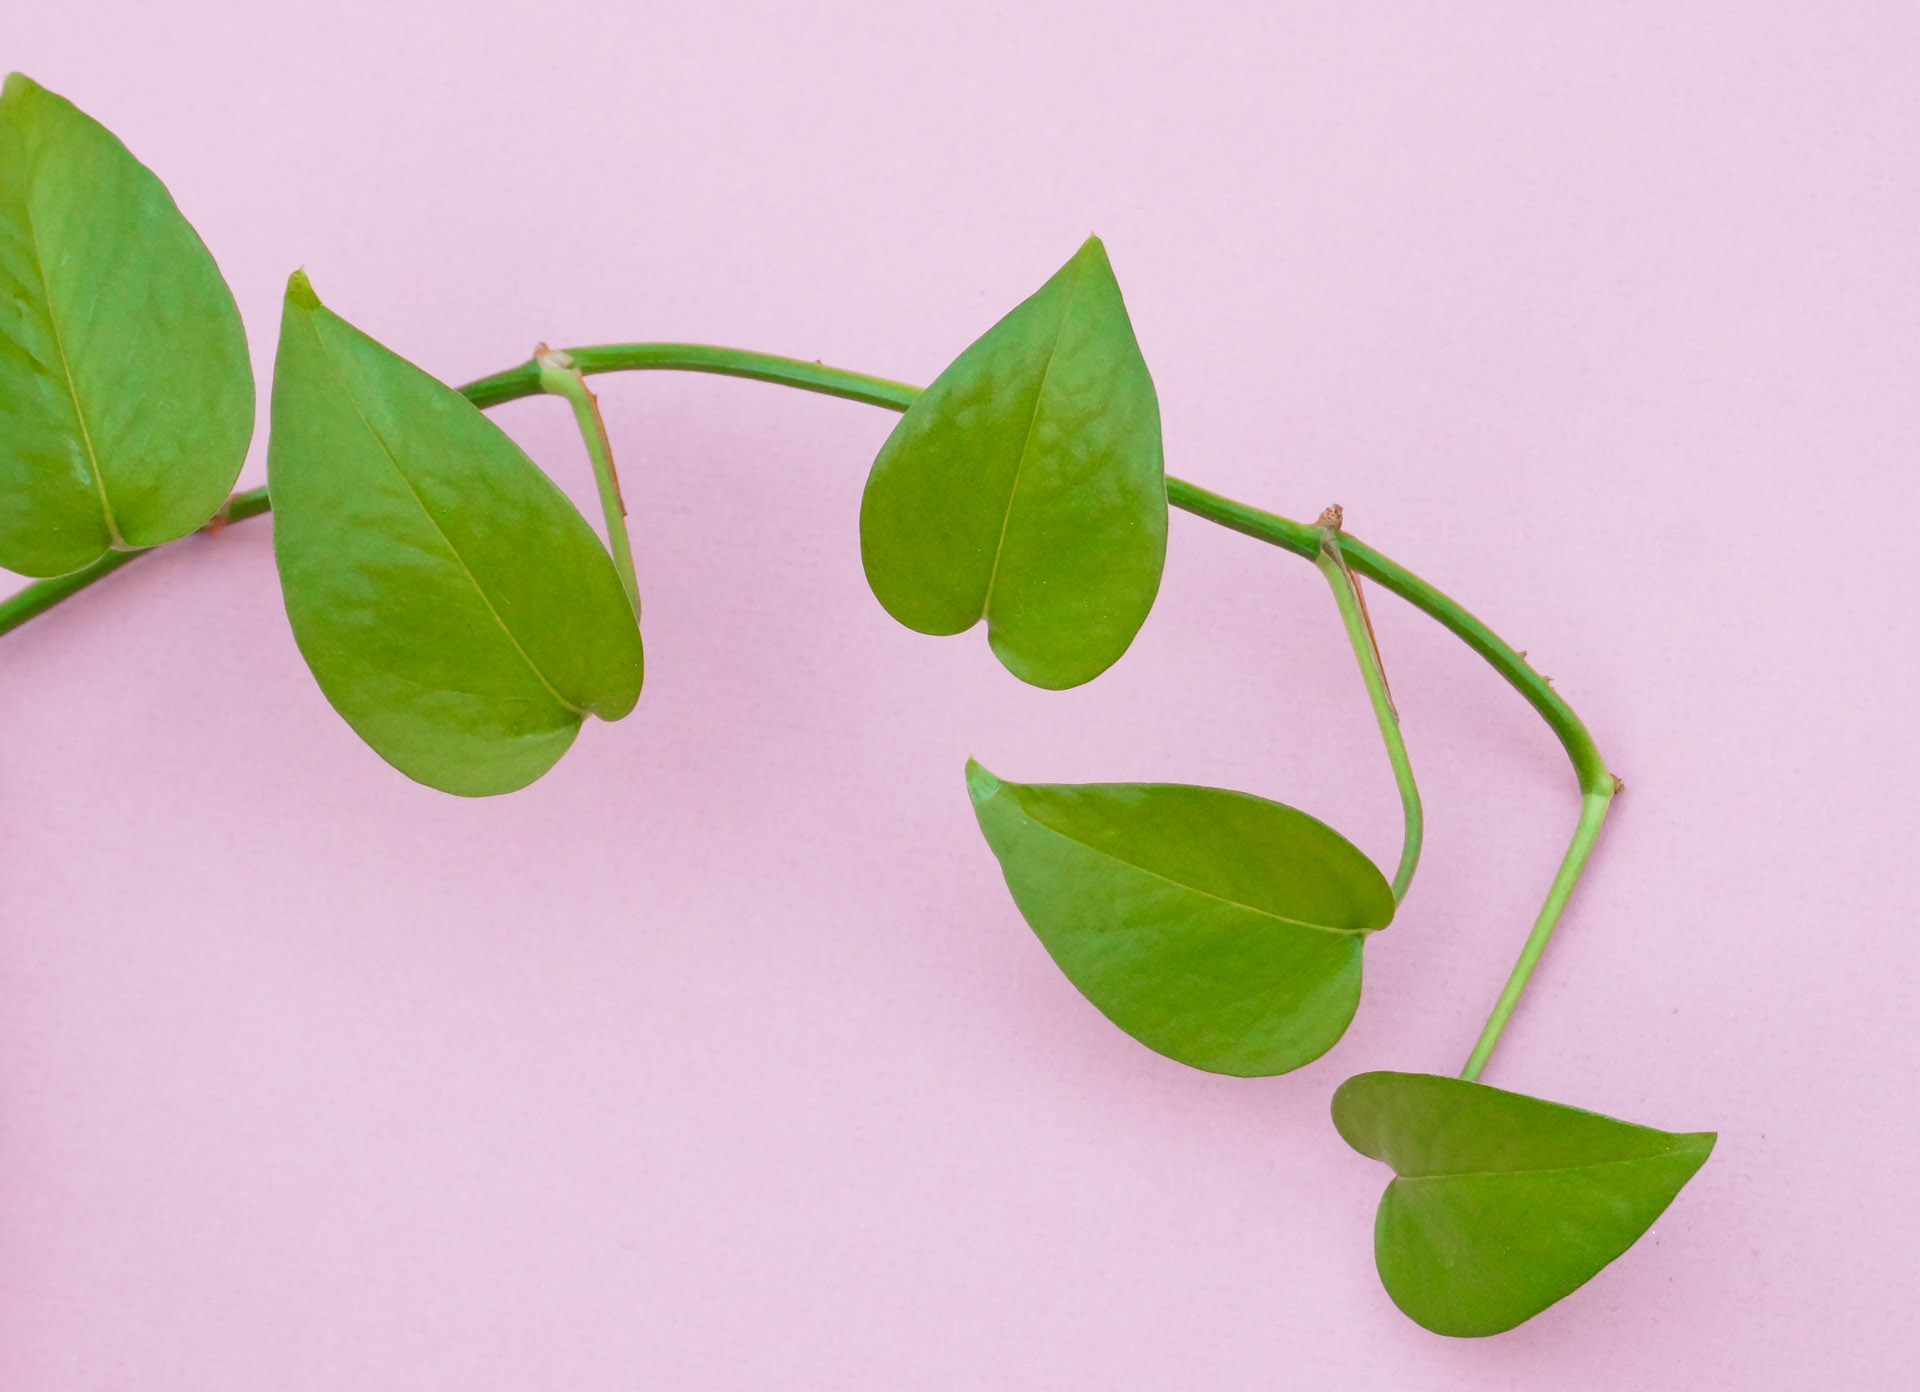 Pothos-houseplant-leaves